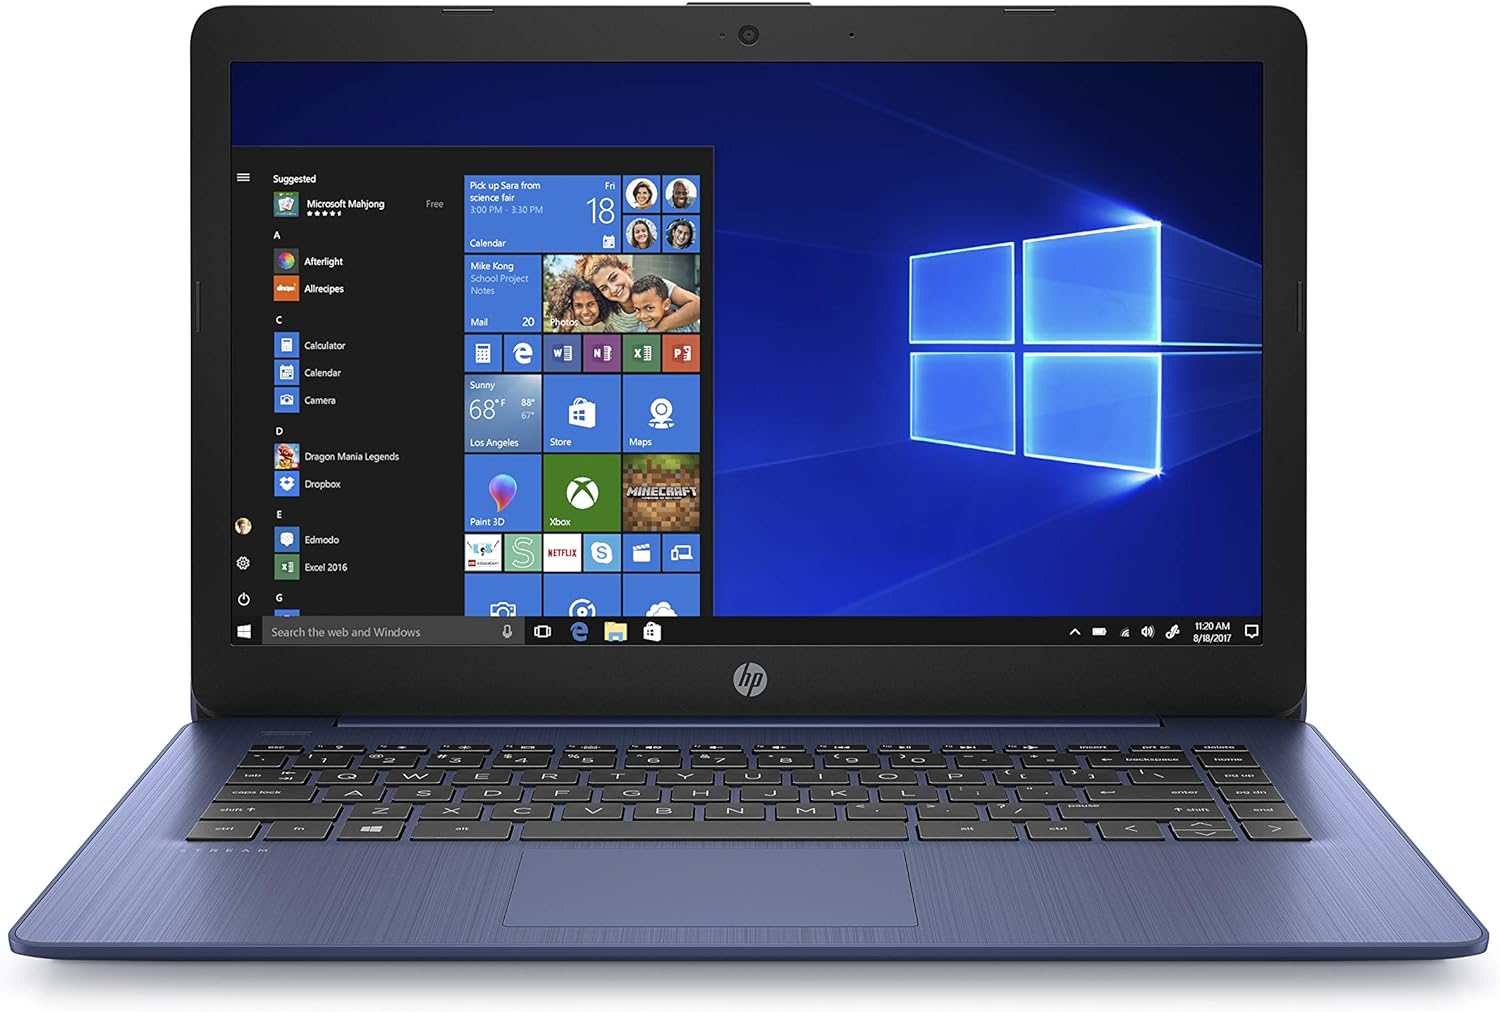 Comparing 4 Laptops: HP Stream, Lenovo IdeaPad, Acer Aspire, HP 14